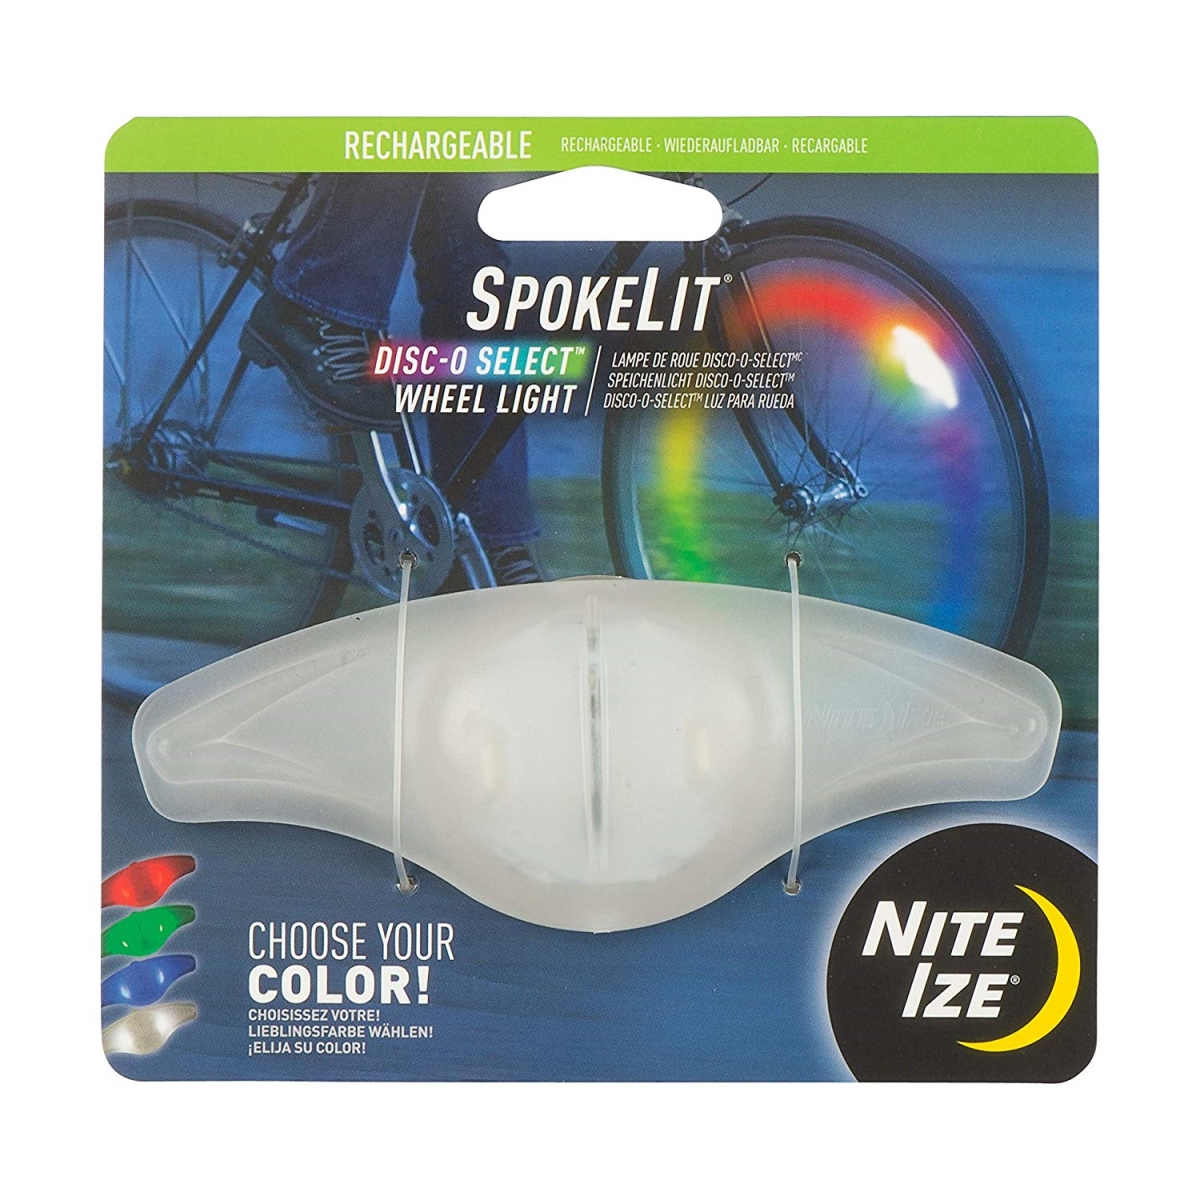 Nite Ize Nit-sklr-07s-r6 2019n Spokelit Rechargeable Wheel Light Disc-o Select